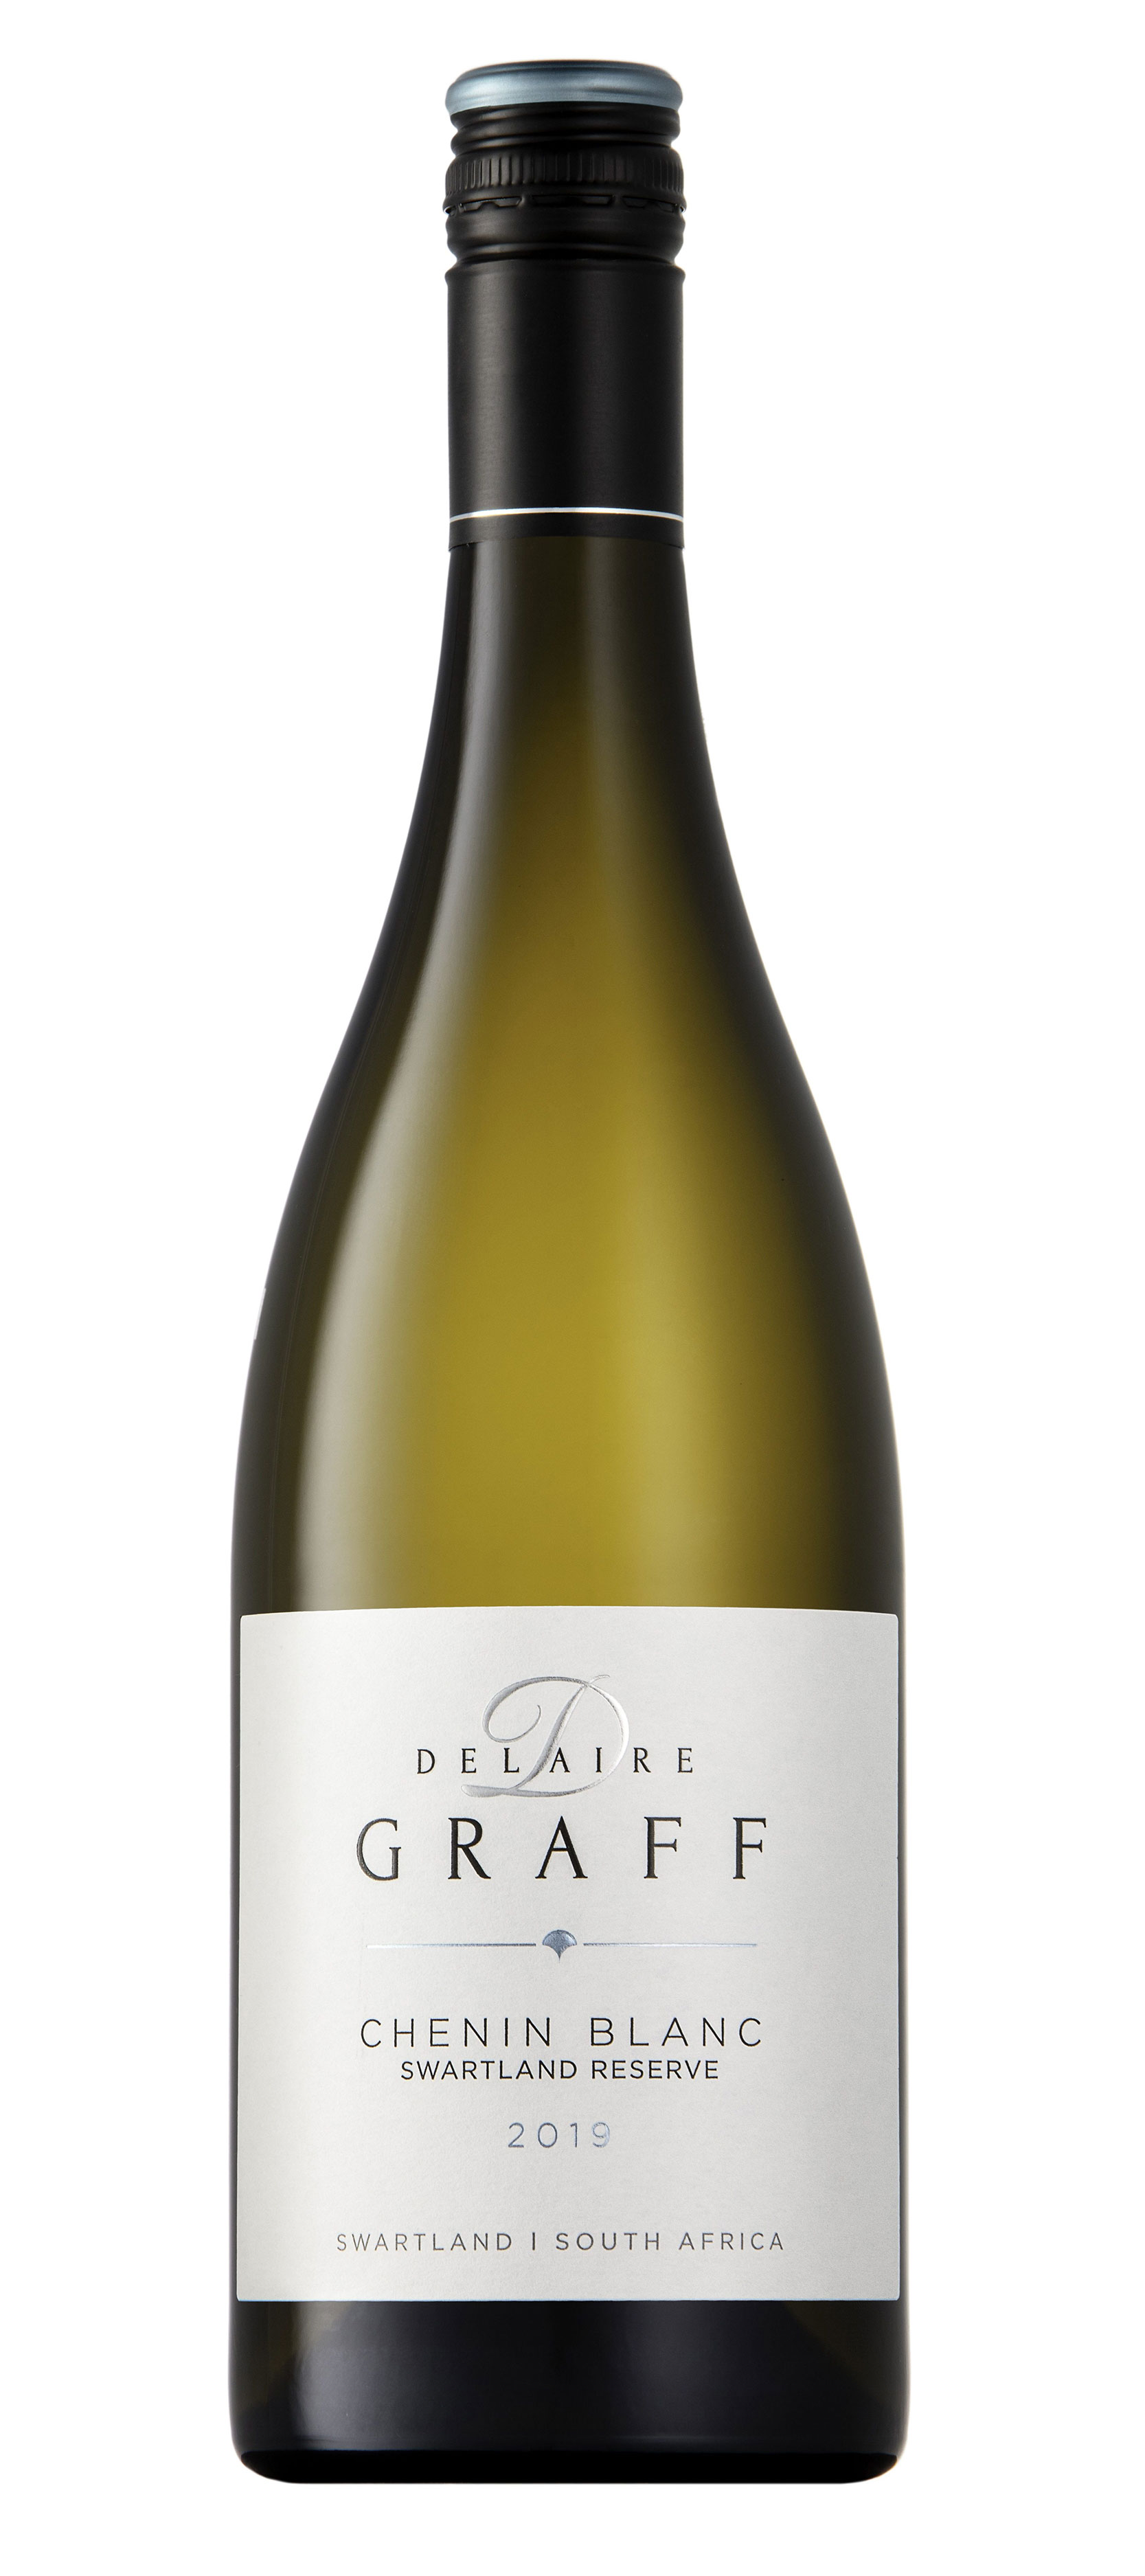 A bottle of Delaire Graff Chenin Blanc Reserve 2019